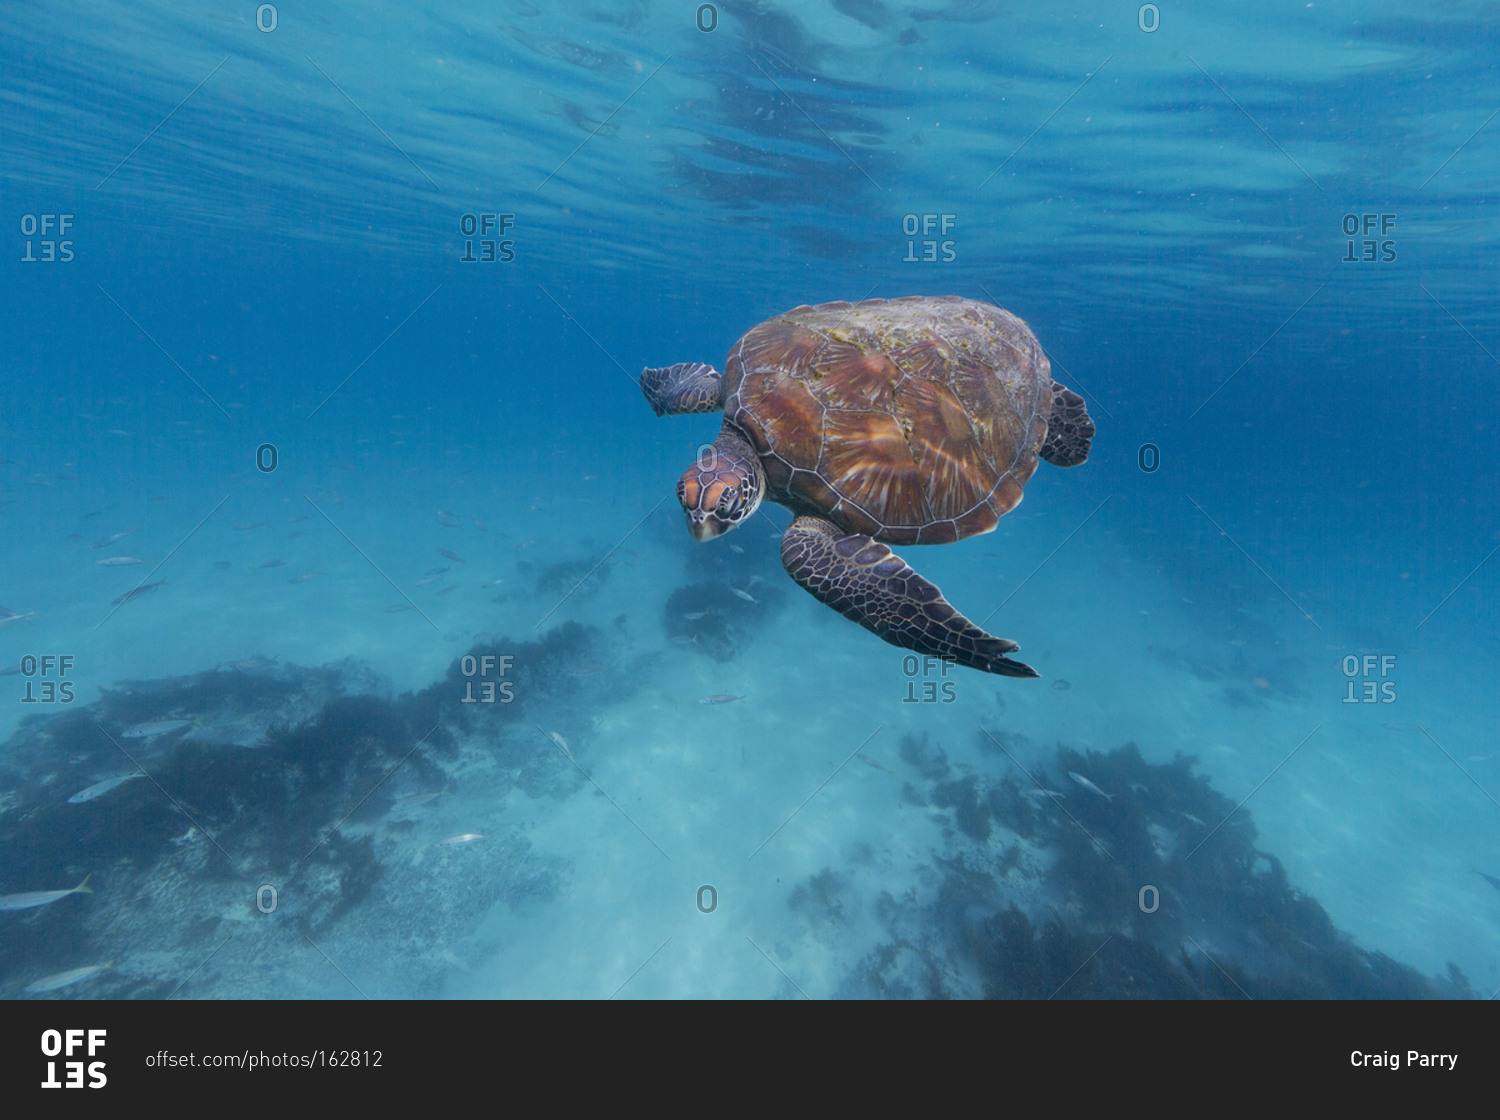 Turtle swimming along underwater